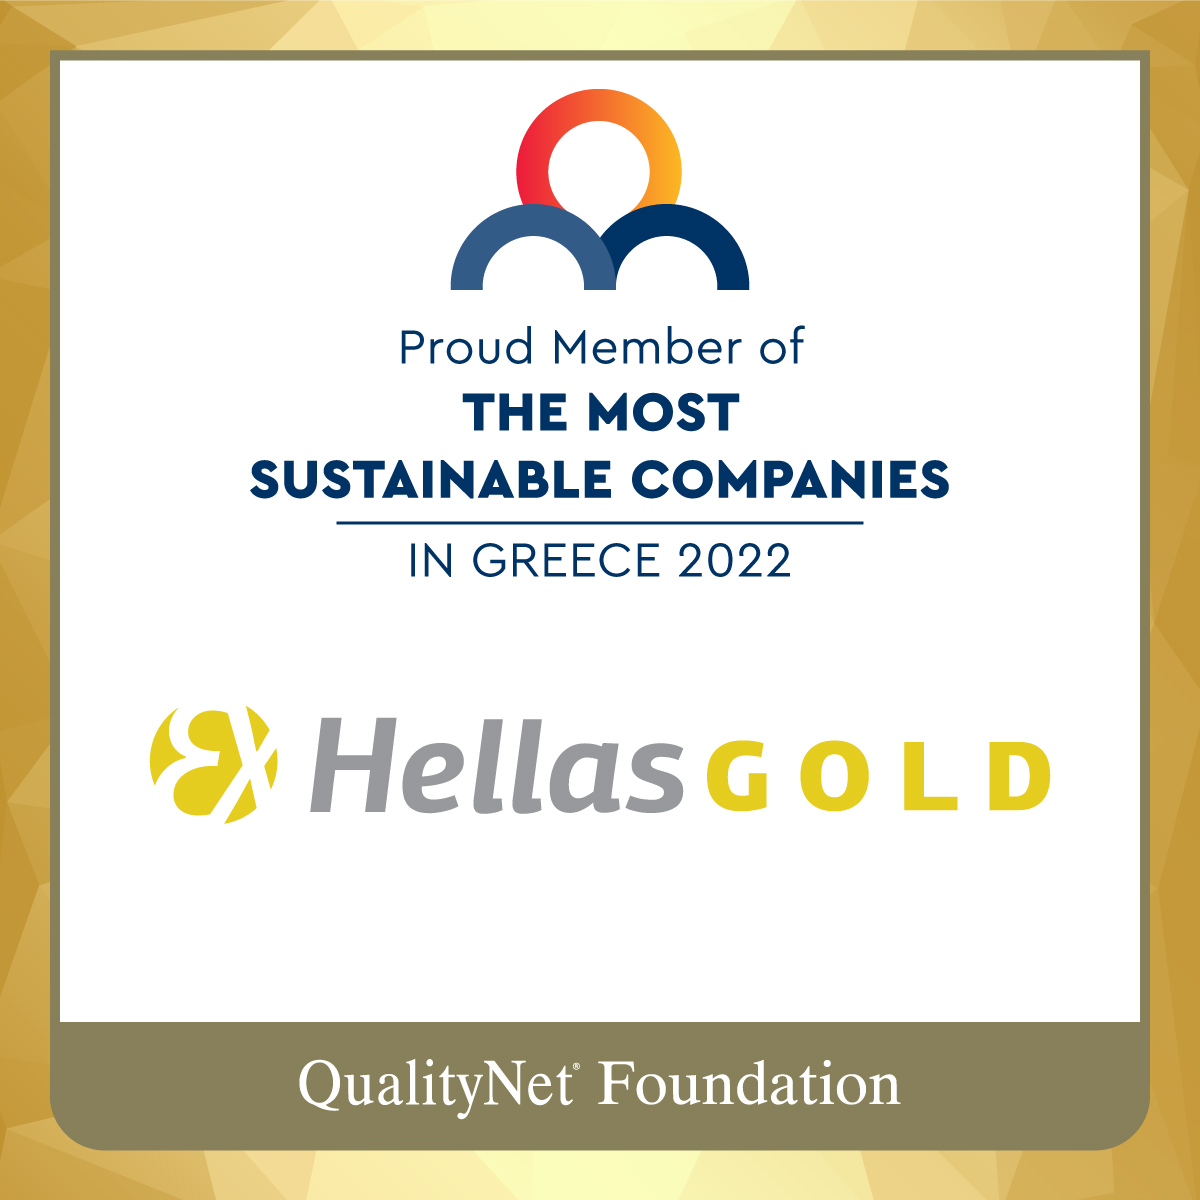 HELLAS GOLD Πηγή: Ελληνικός Χρυσός